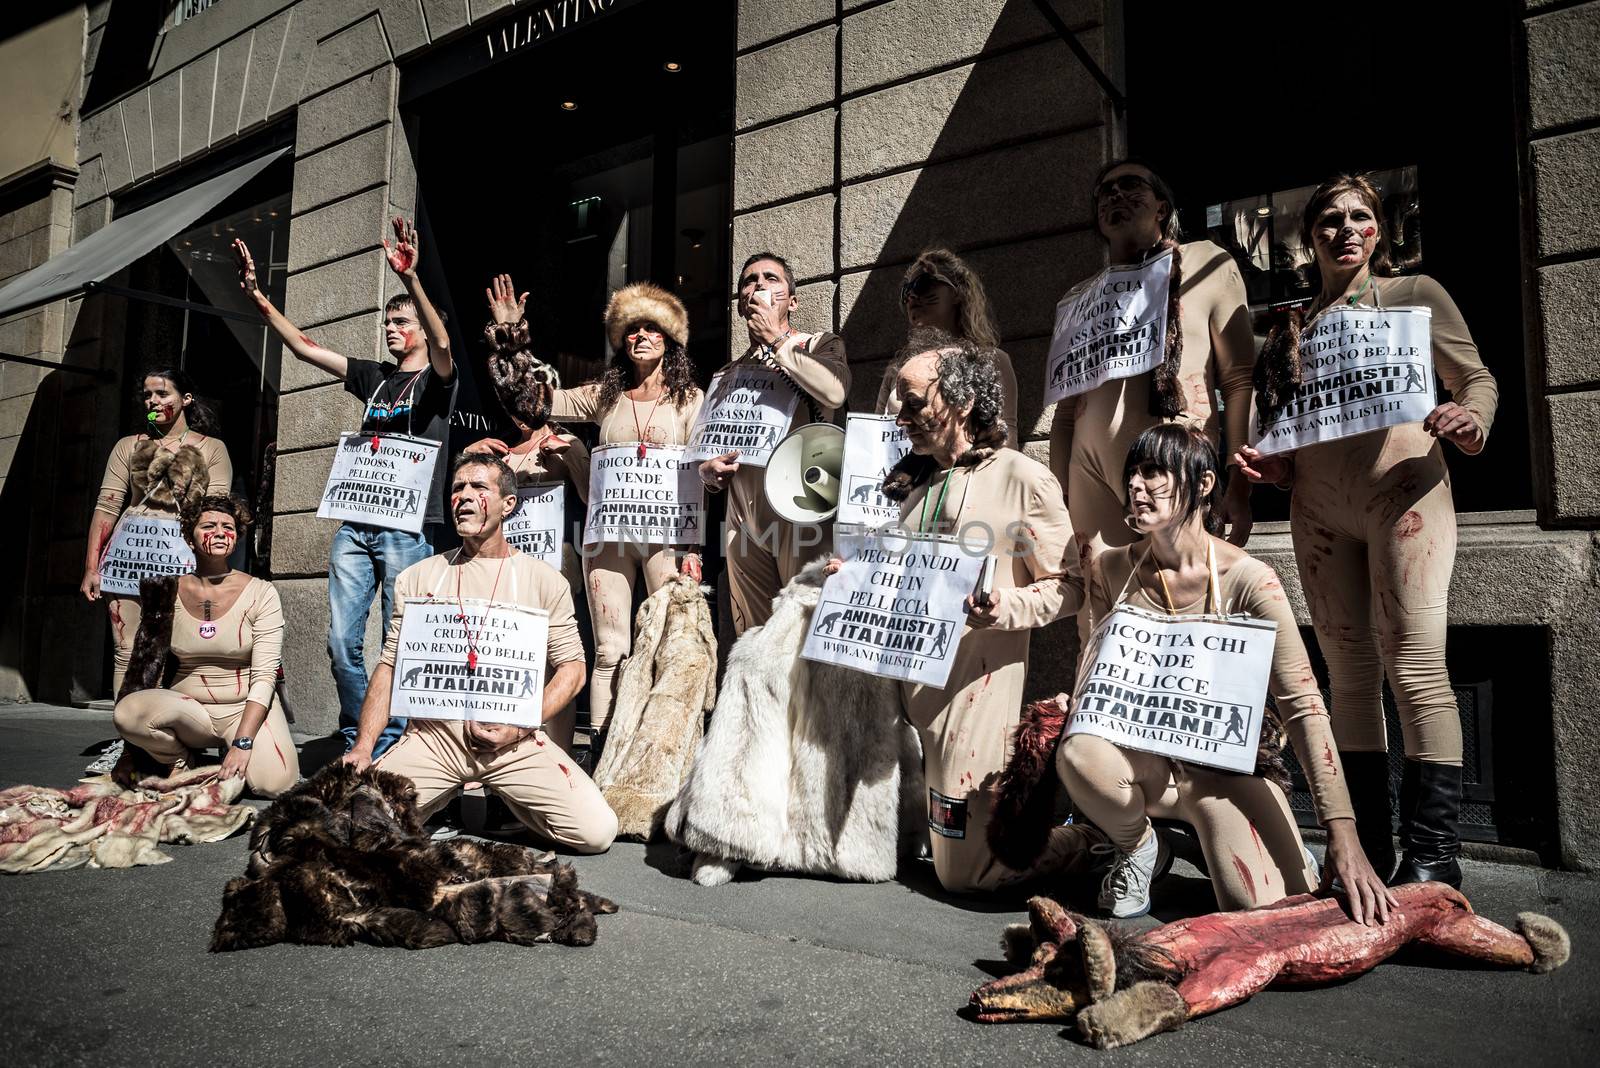 Animalisti Italiani protest against Milan Fashion Week on Septem by peus